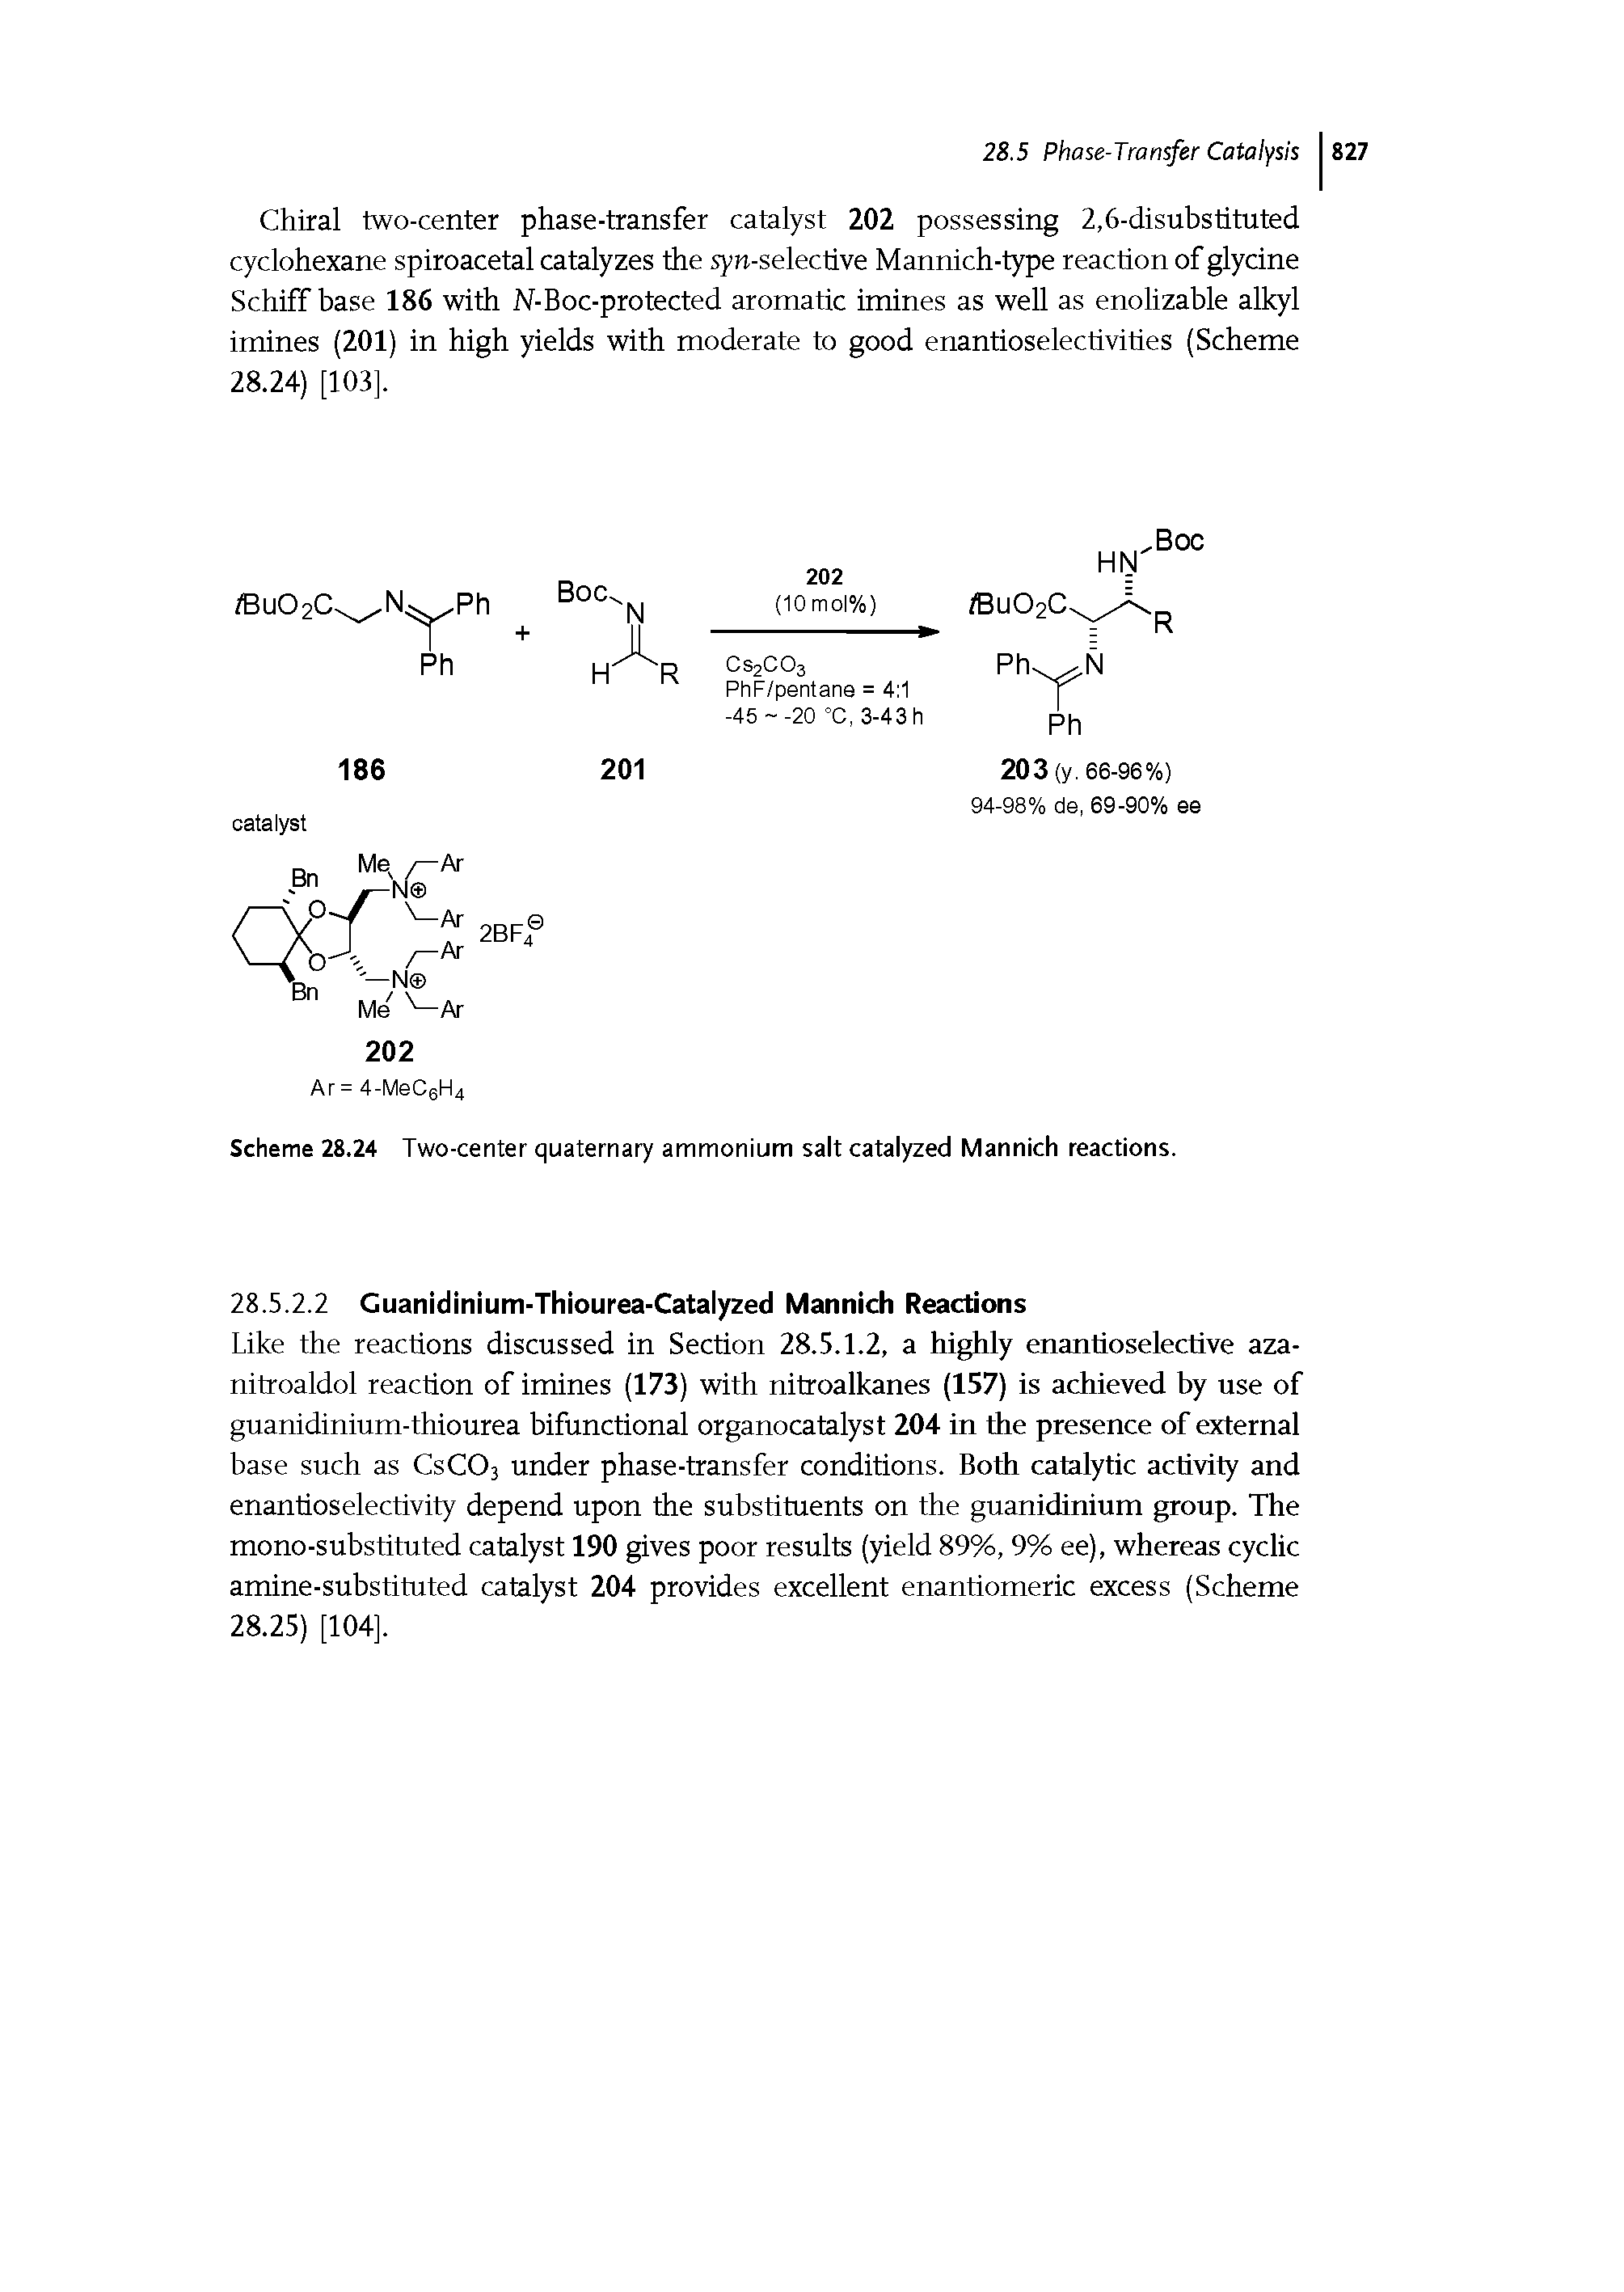 Scheme 28.24 Two-center quaternary ammonium salt catalyzed Mannich reactions.